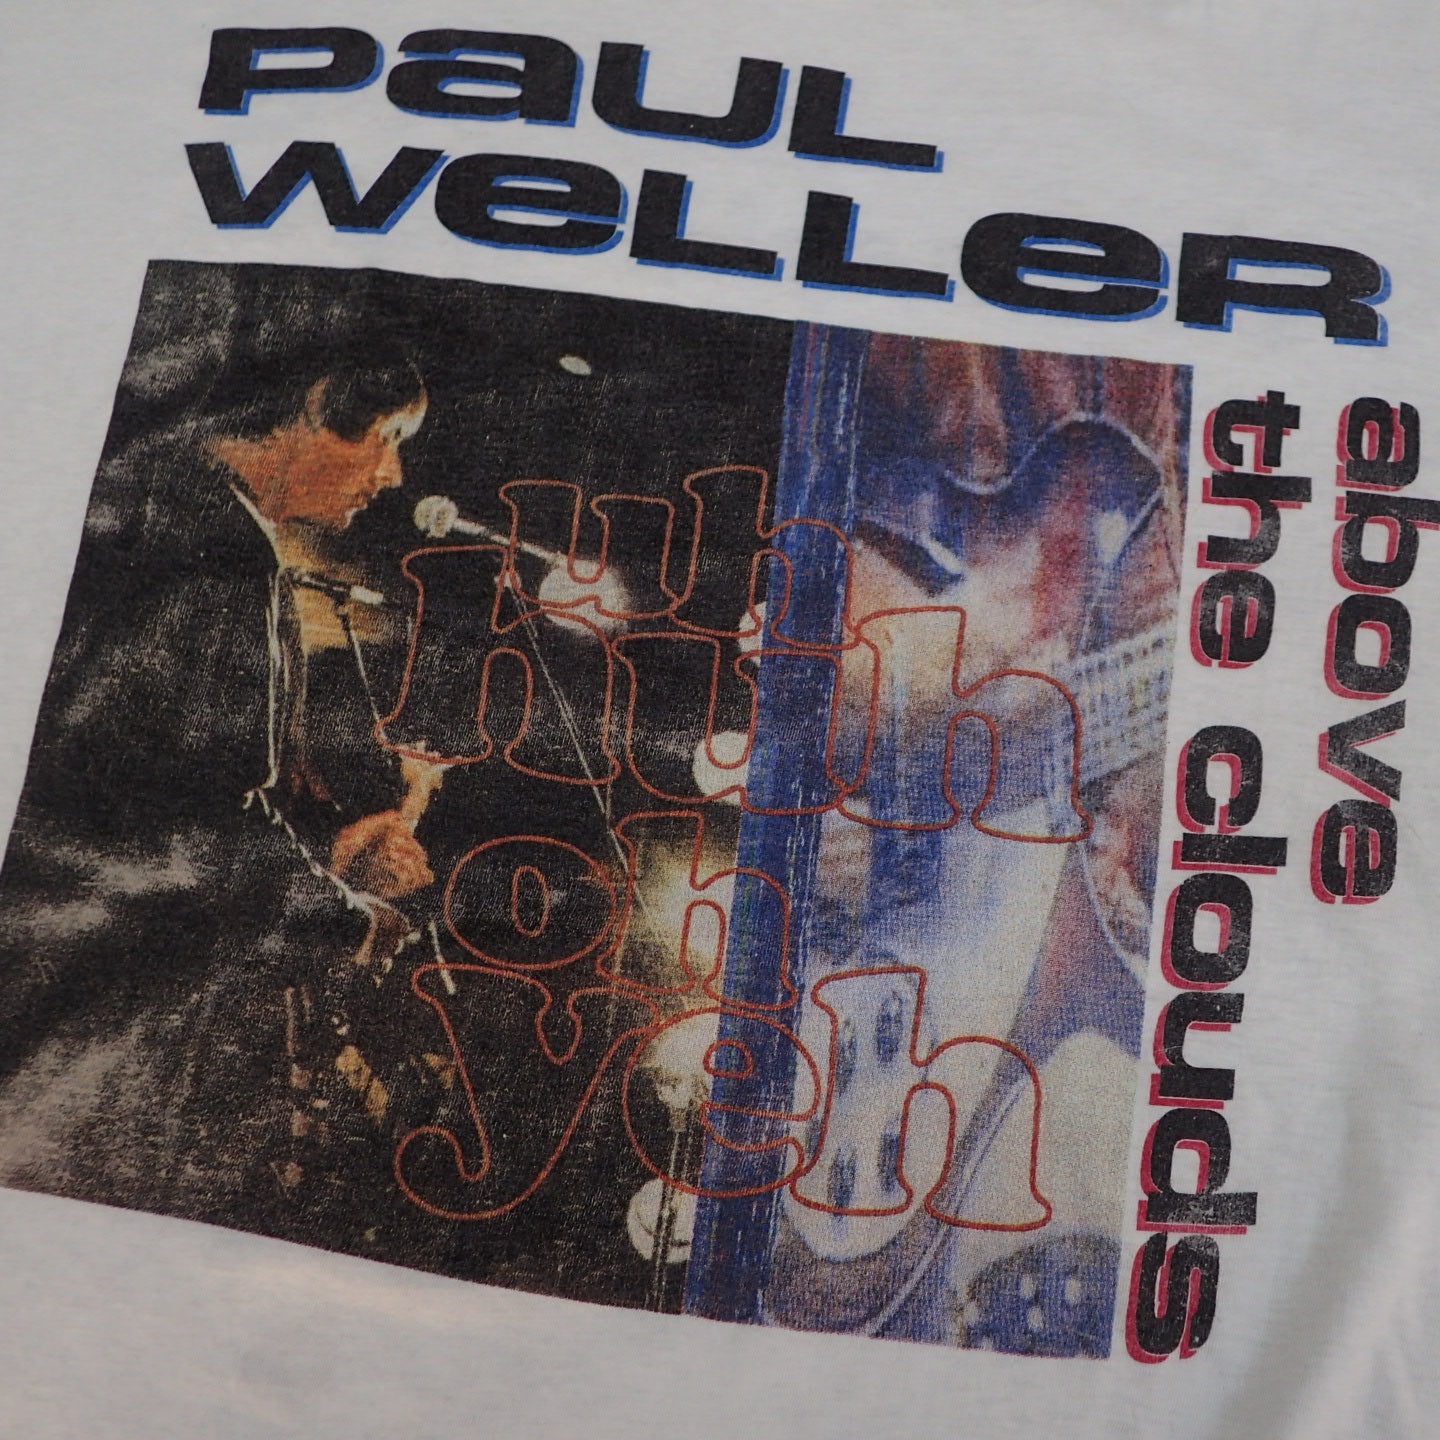 90s Paul Weller " 1992 Tour Tee"